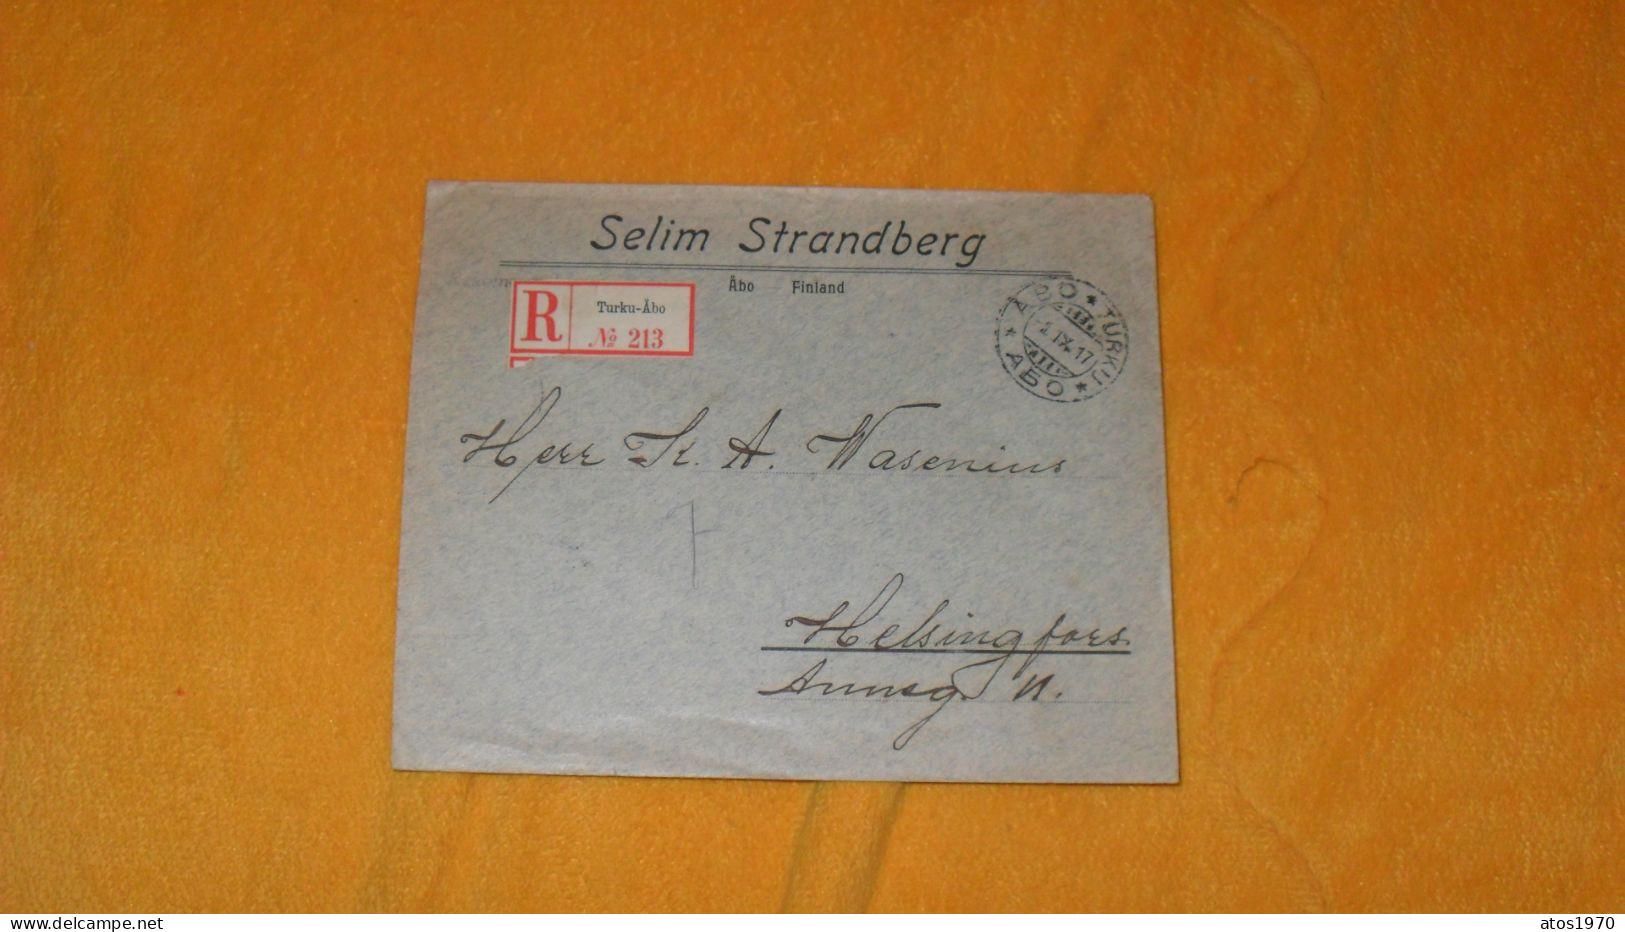 ENVELOPPE ANCIENNE DE 1917../ SELIM STRANDBERG ABO FINLAND..RECOMMANDE TURKU ABO N°213 POUR HELSINKI ?..+ TIMBRES X 25 - Briefe U. Dokumente